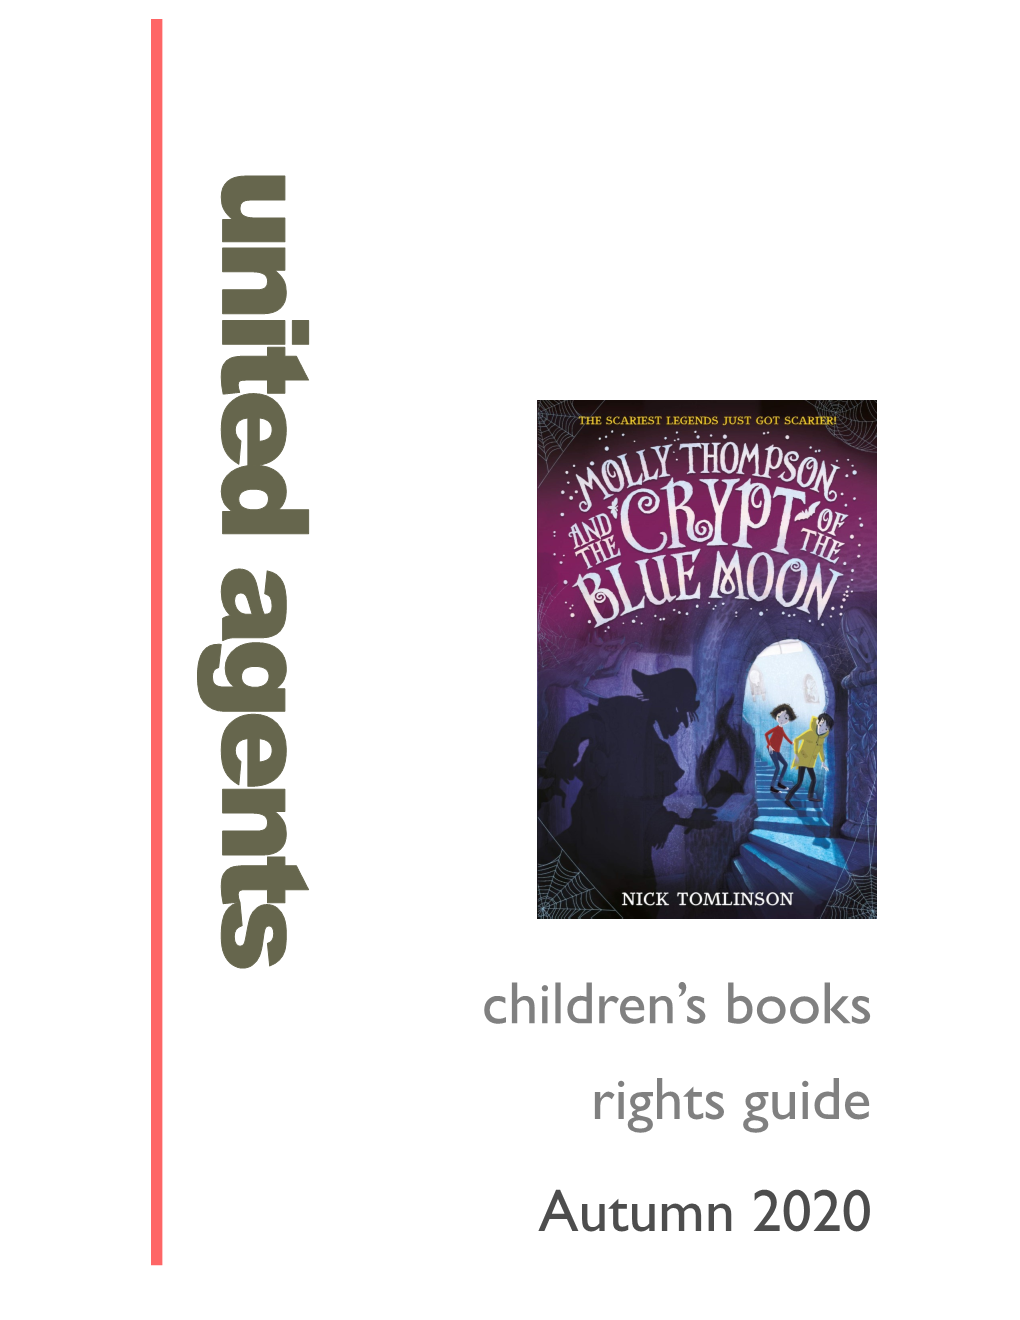 Children's Books Rights Guide Autumn 2020